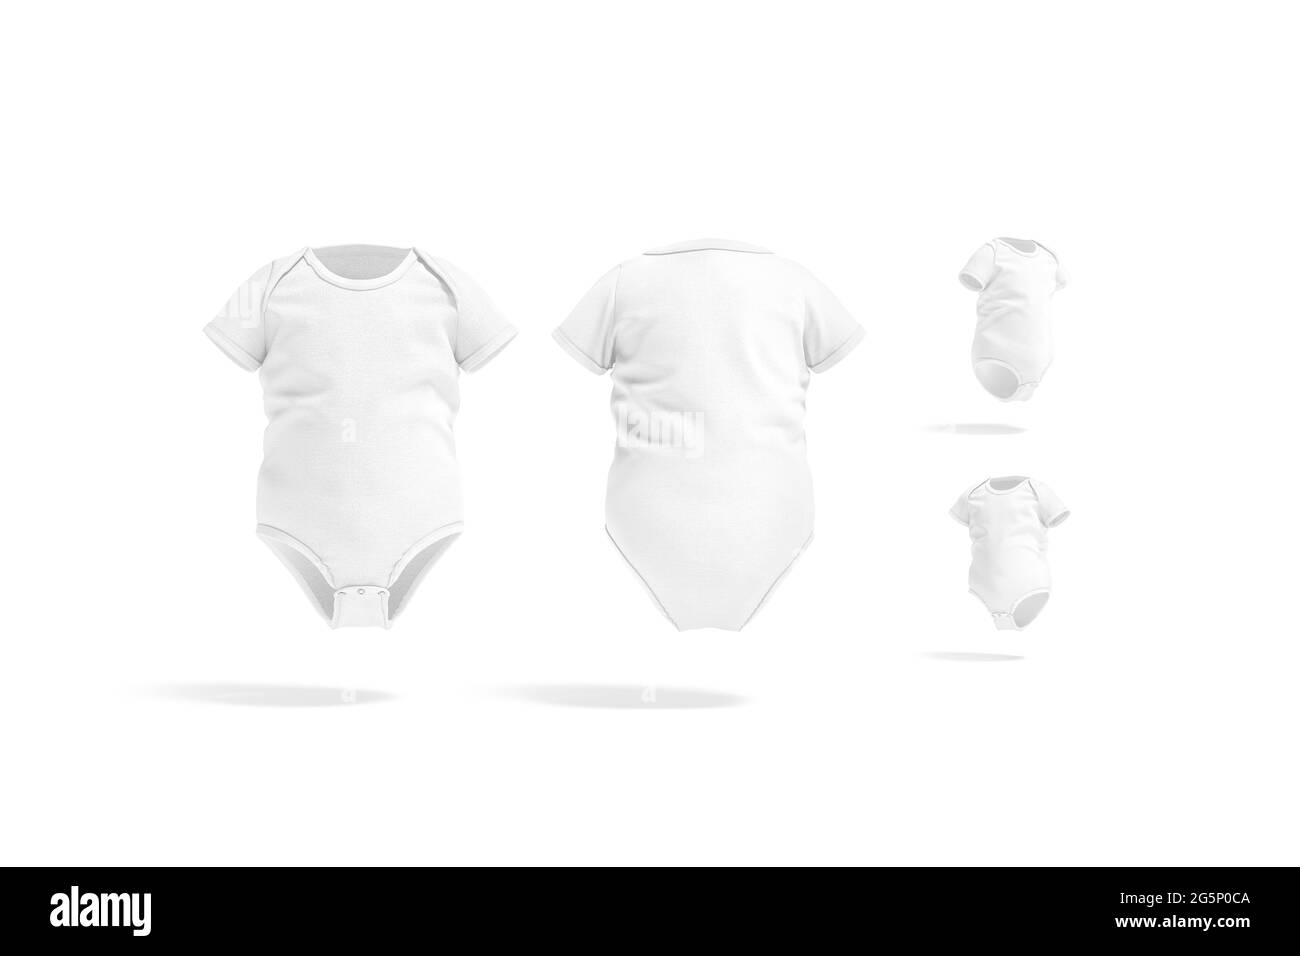 Mockup di bodysuit bianco a mezza manica per bambini, vista diversa Foto Stock